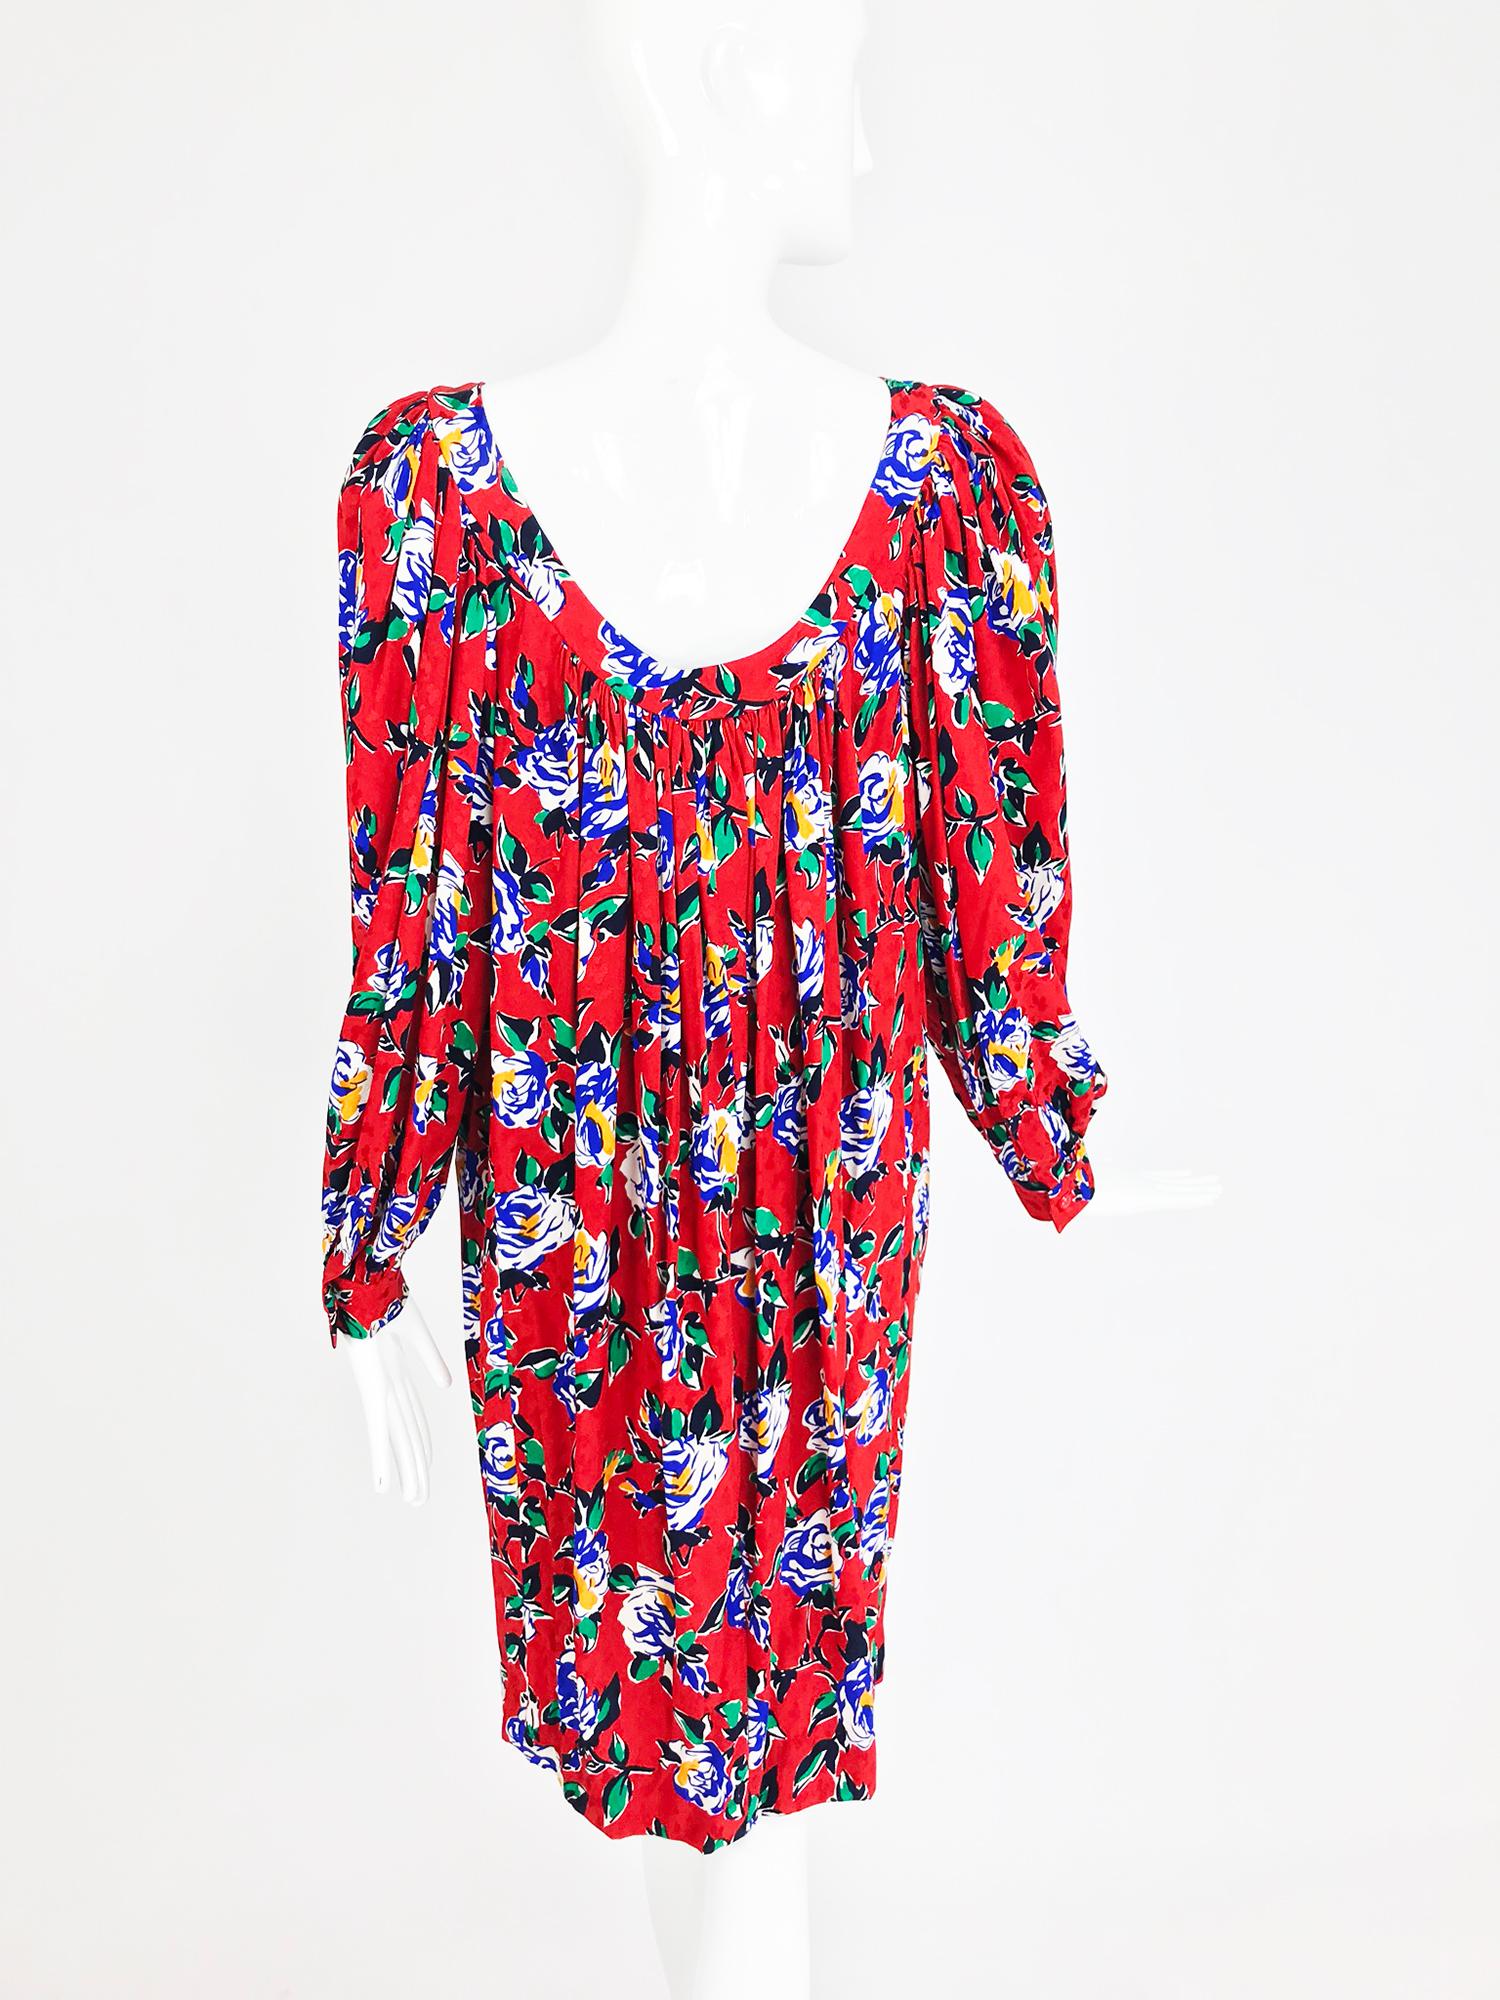 Yves Saint Laurent Red Floral Silk Jacquard Scoop Neck Dress, 1980s 2